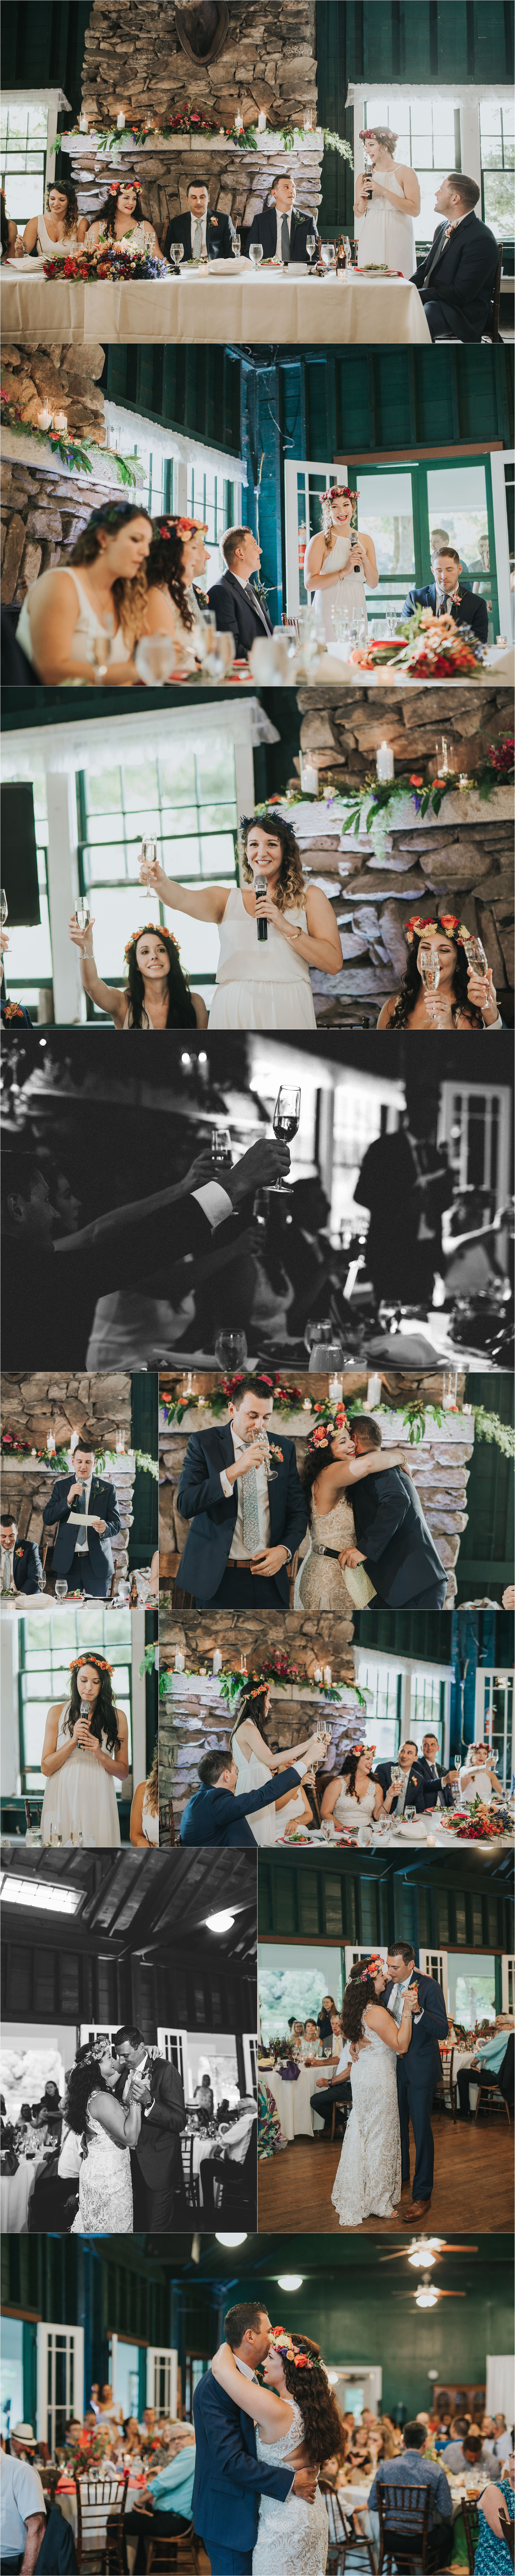 12-pittsburgh-wedding-photographer-videographer.jpg